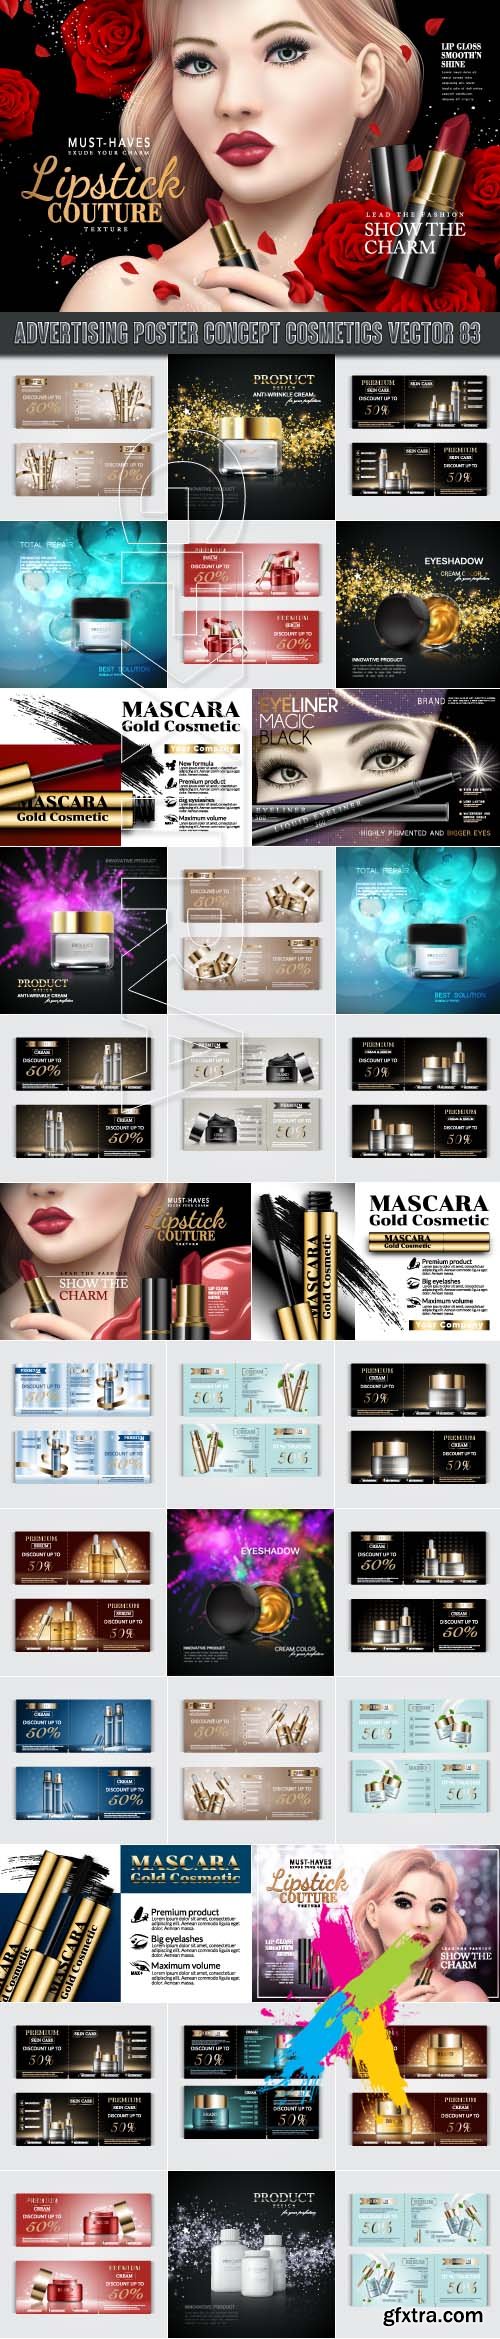 Advertising Poster Concept Cosmetics vector 83